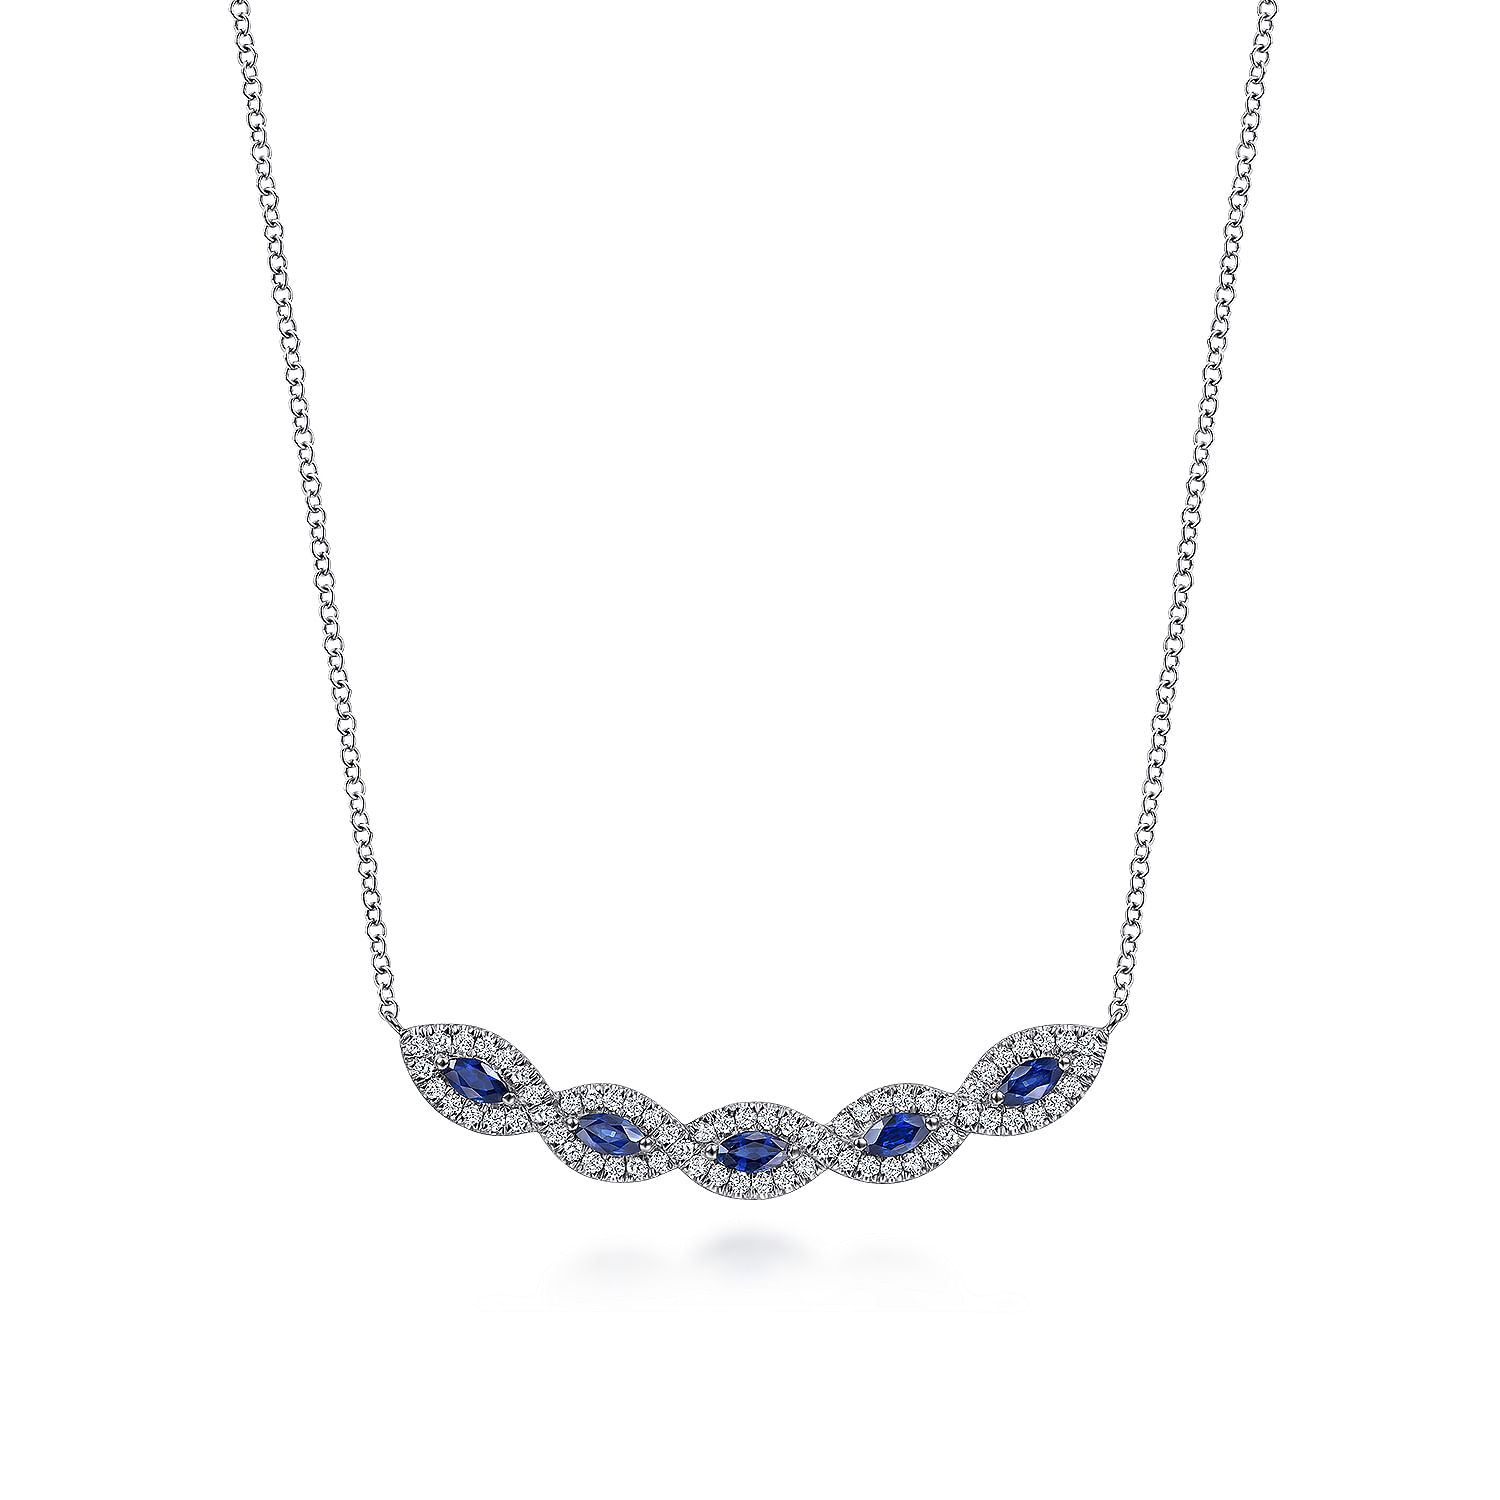 14K White Gold Diamond & Sapphire Necklace